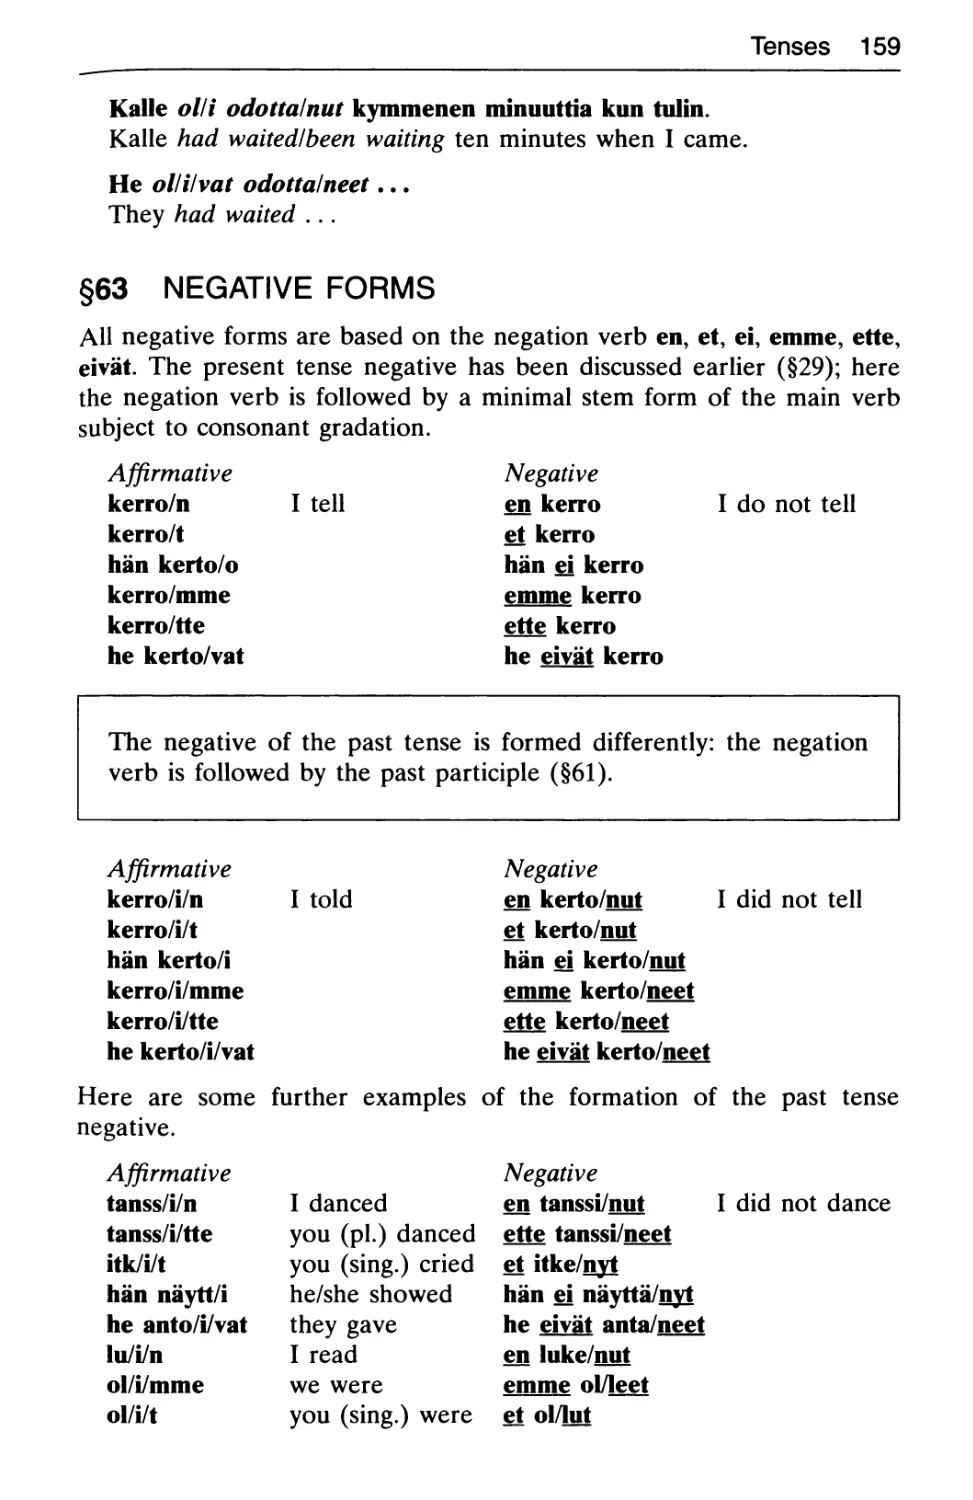 §63 Negative forms